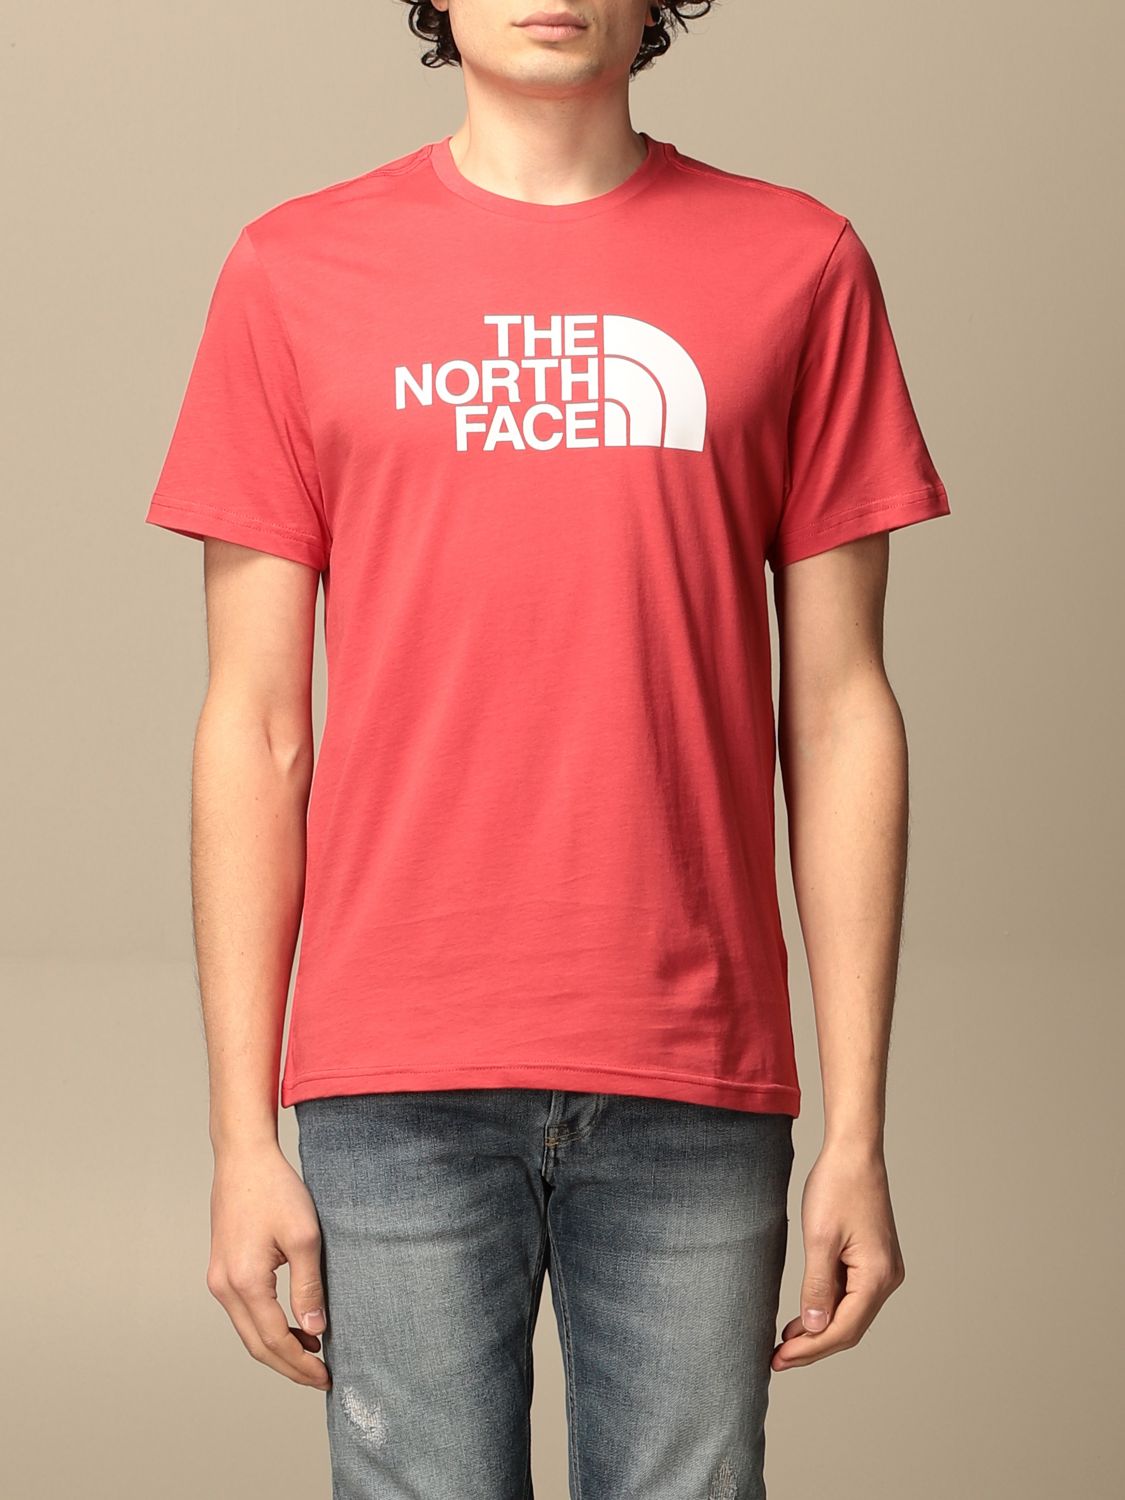 The North Face T Shirt Men T Shirt The North Face Men Red T Shirt The North Face Nf0a2tx3 Giglio En